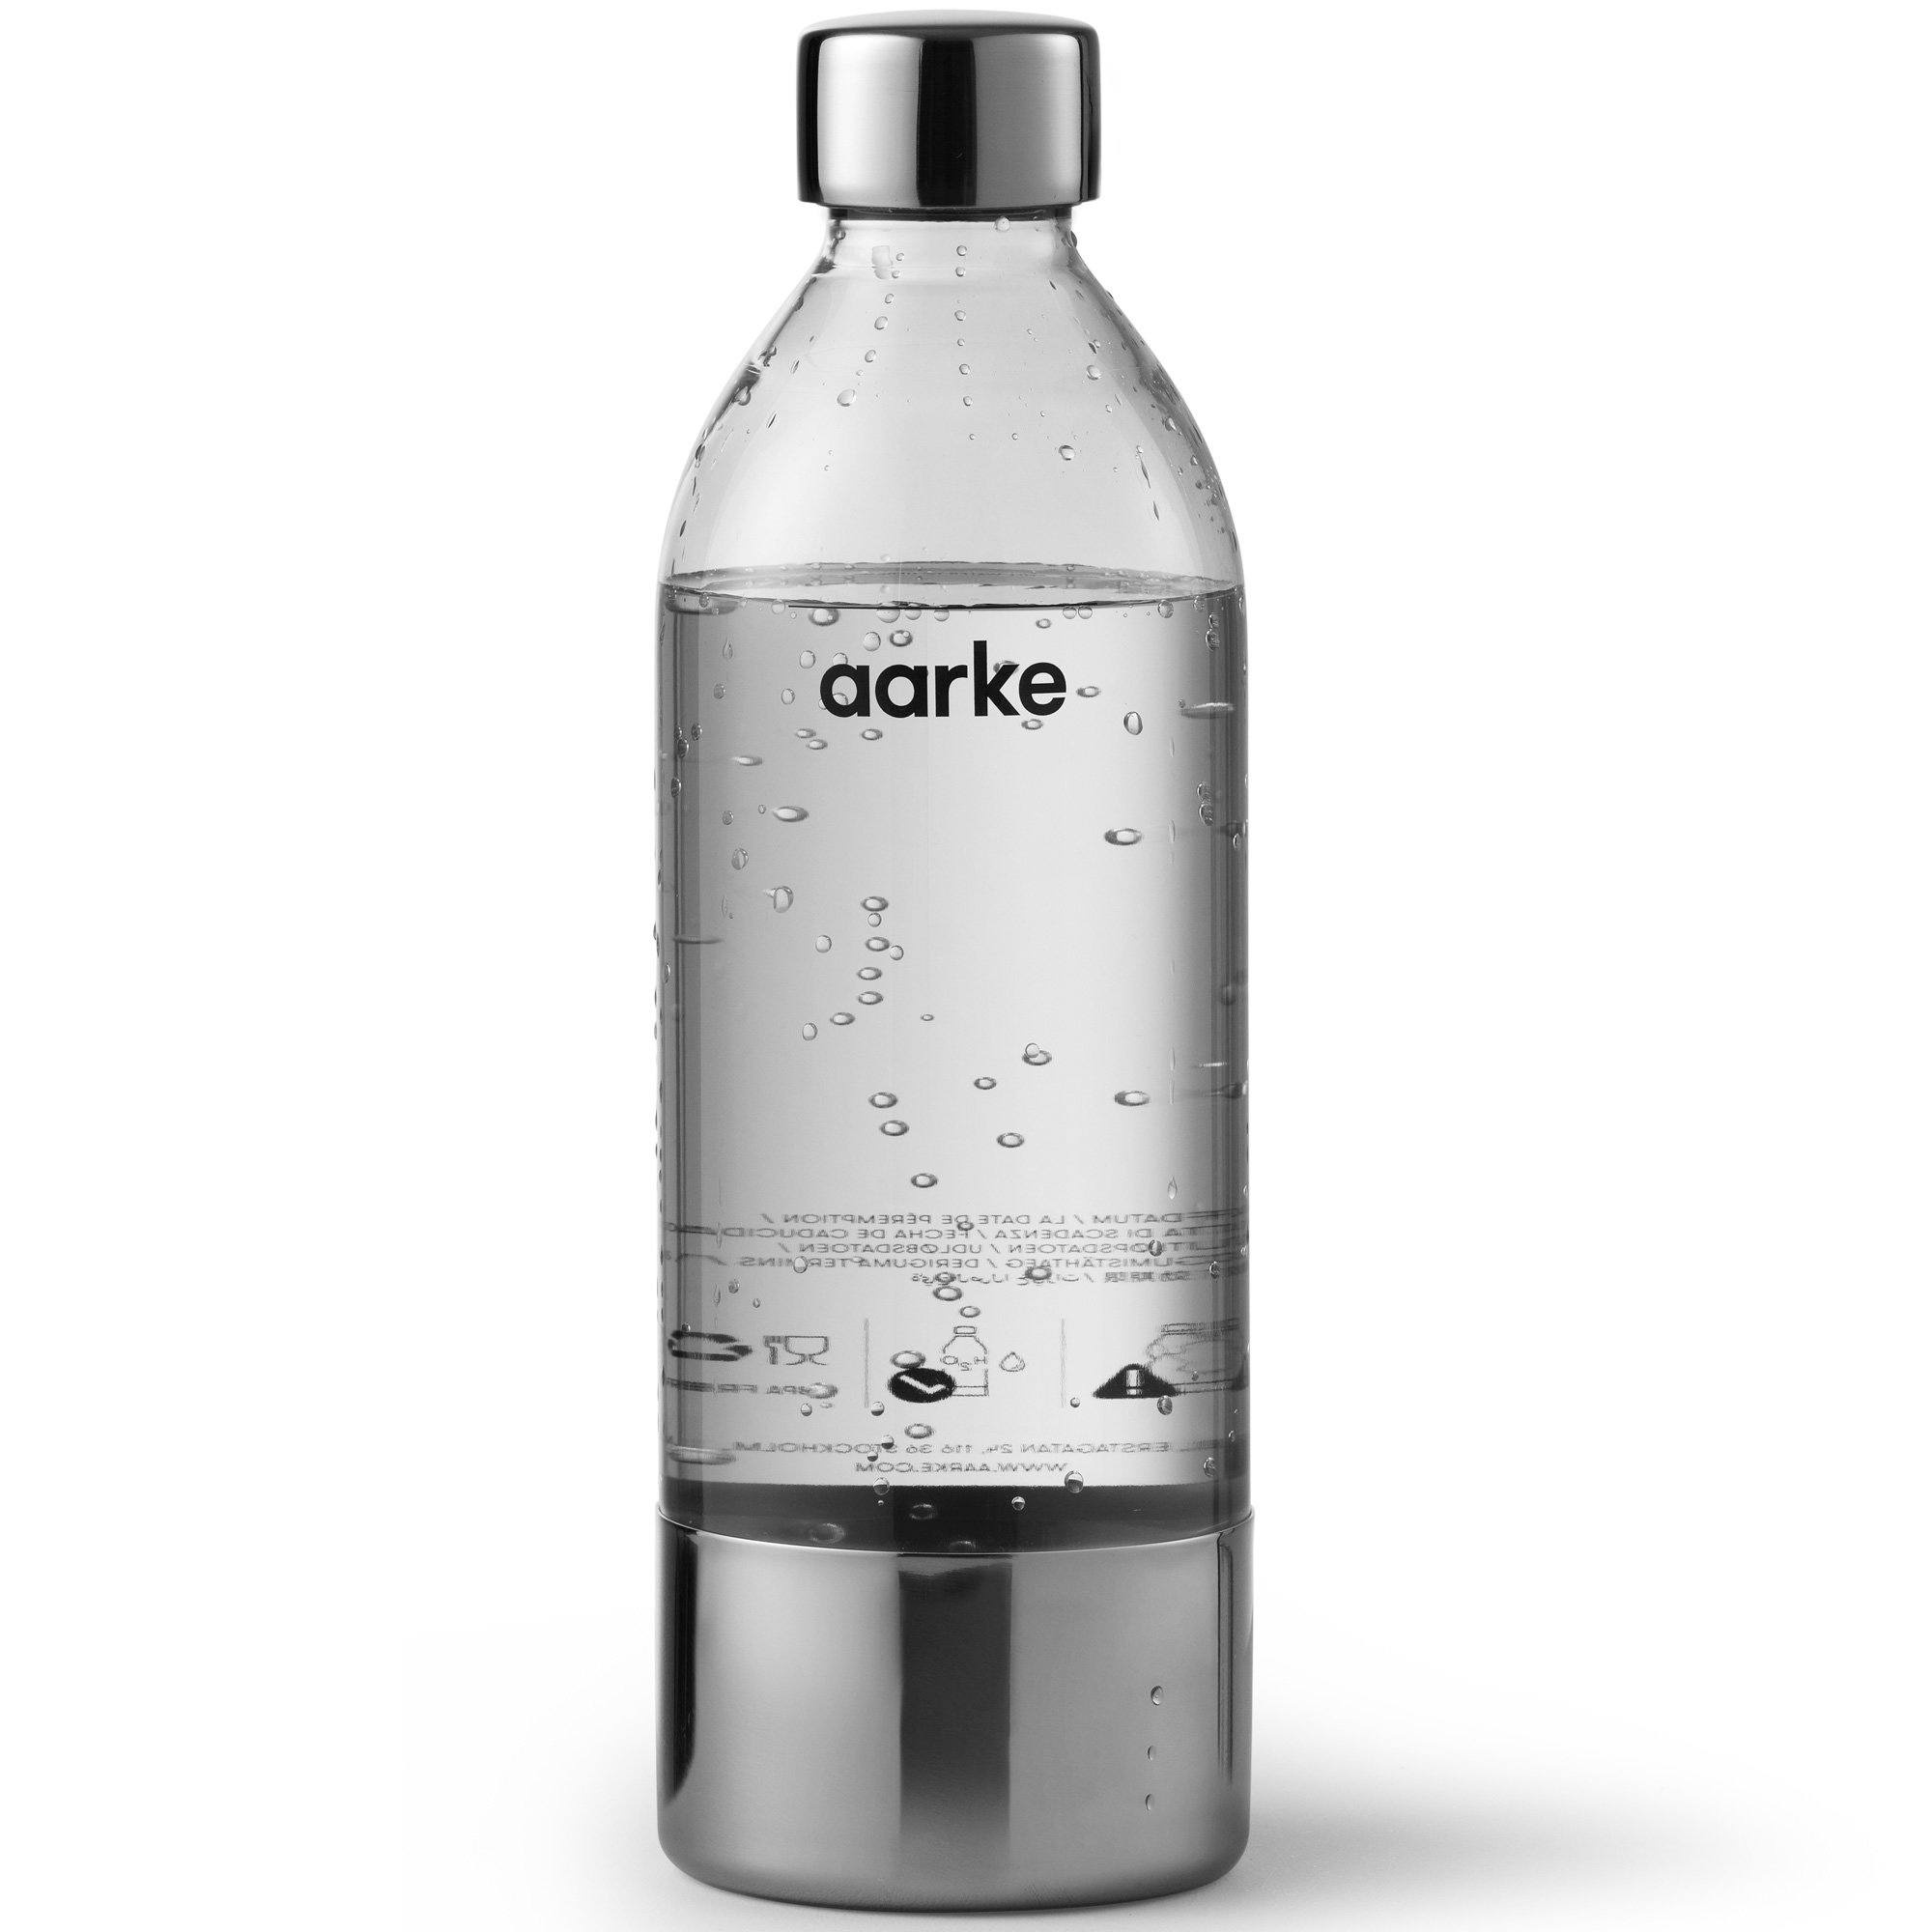 Bilde av Aarke Pet Flaske Til Carbonator 3, Stål